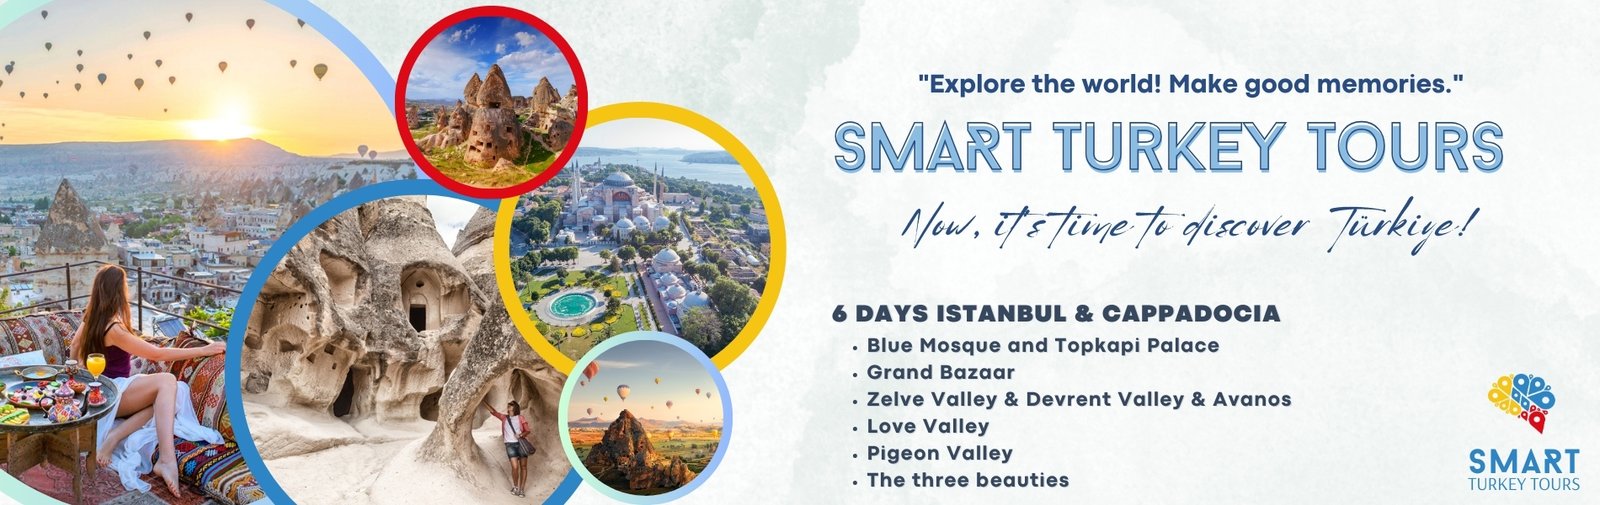 6 DAYS ISTANBUL & CAPPADOCIA TOUR / Istanbul, Cappadocia